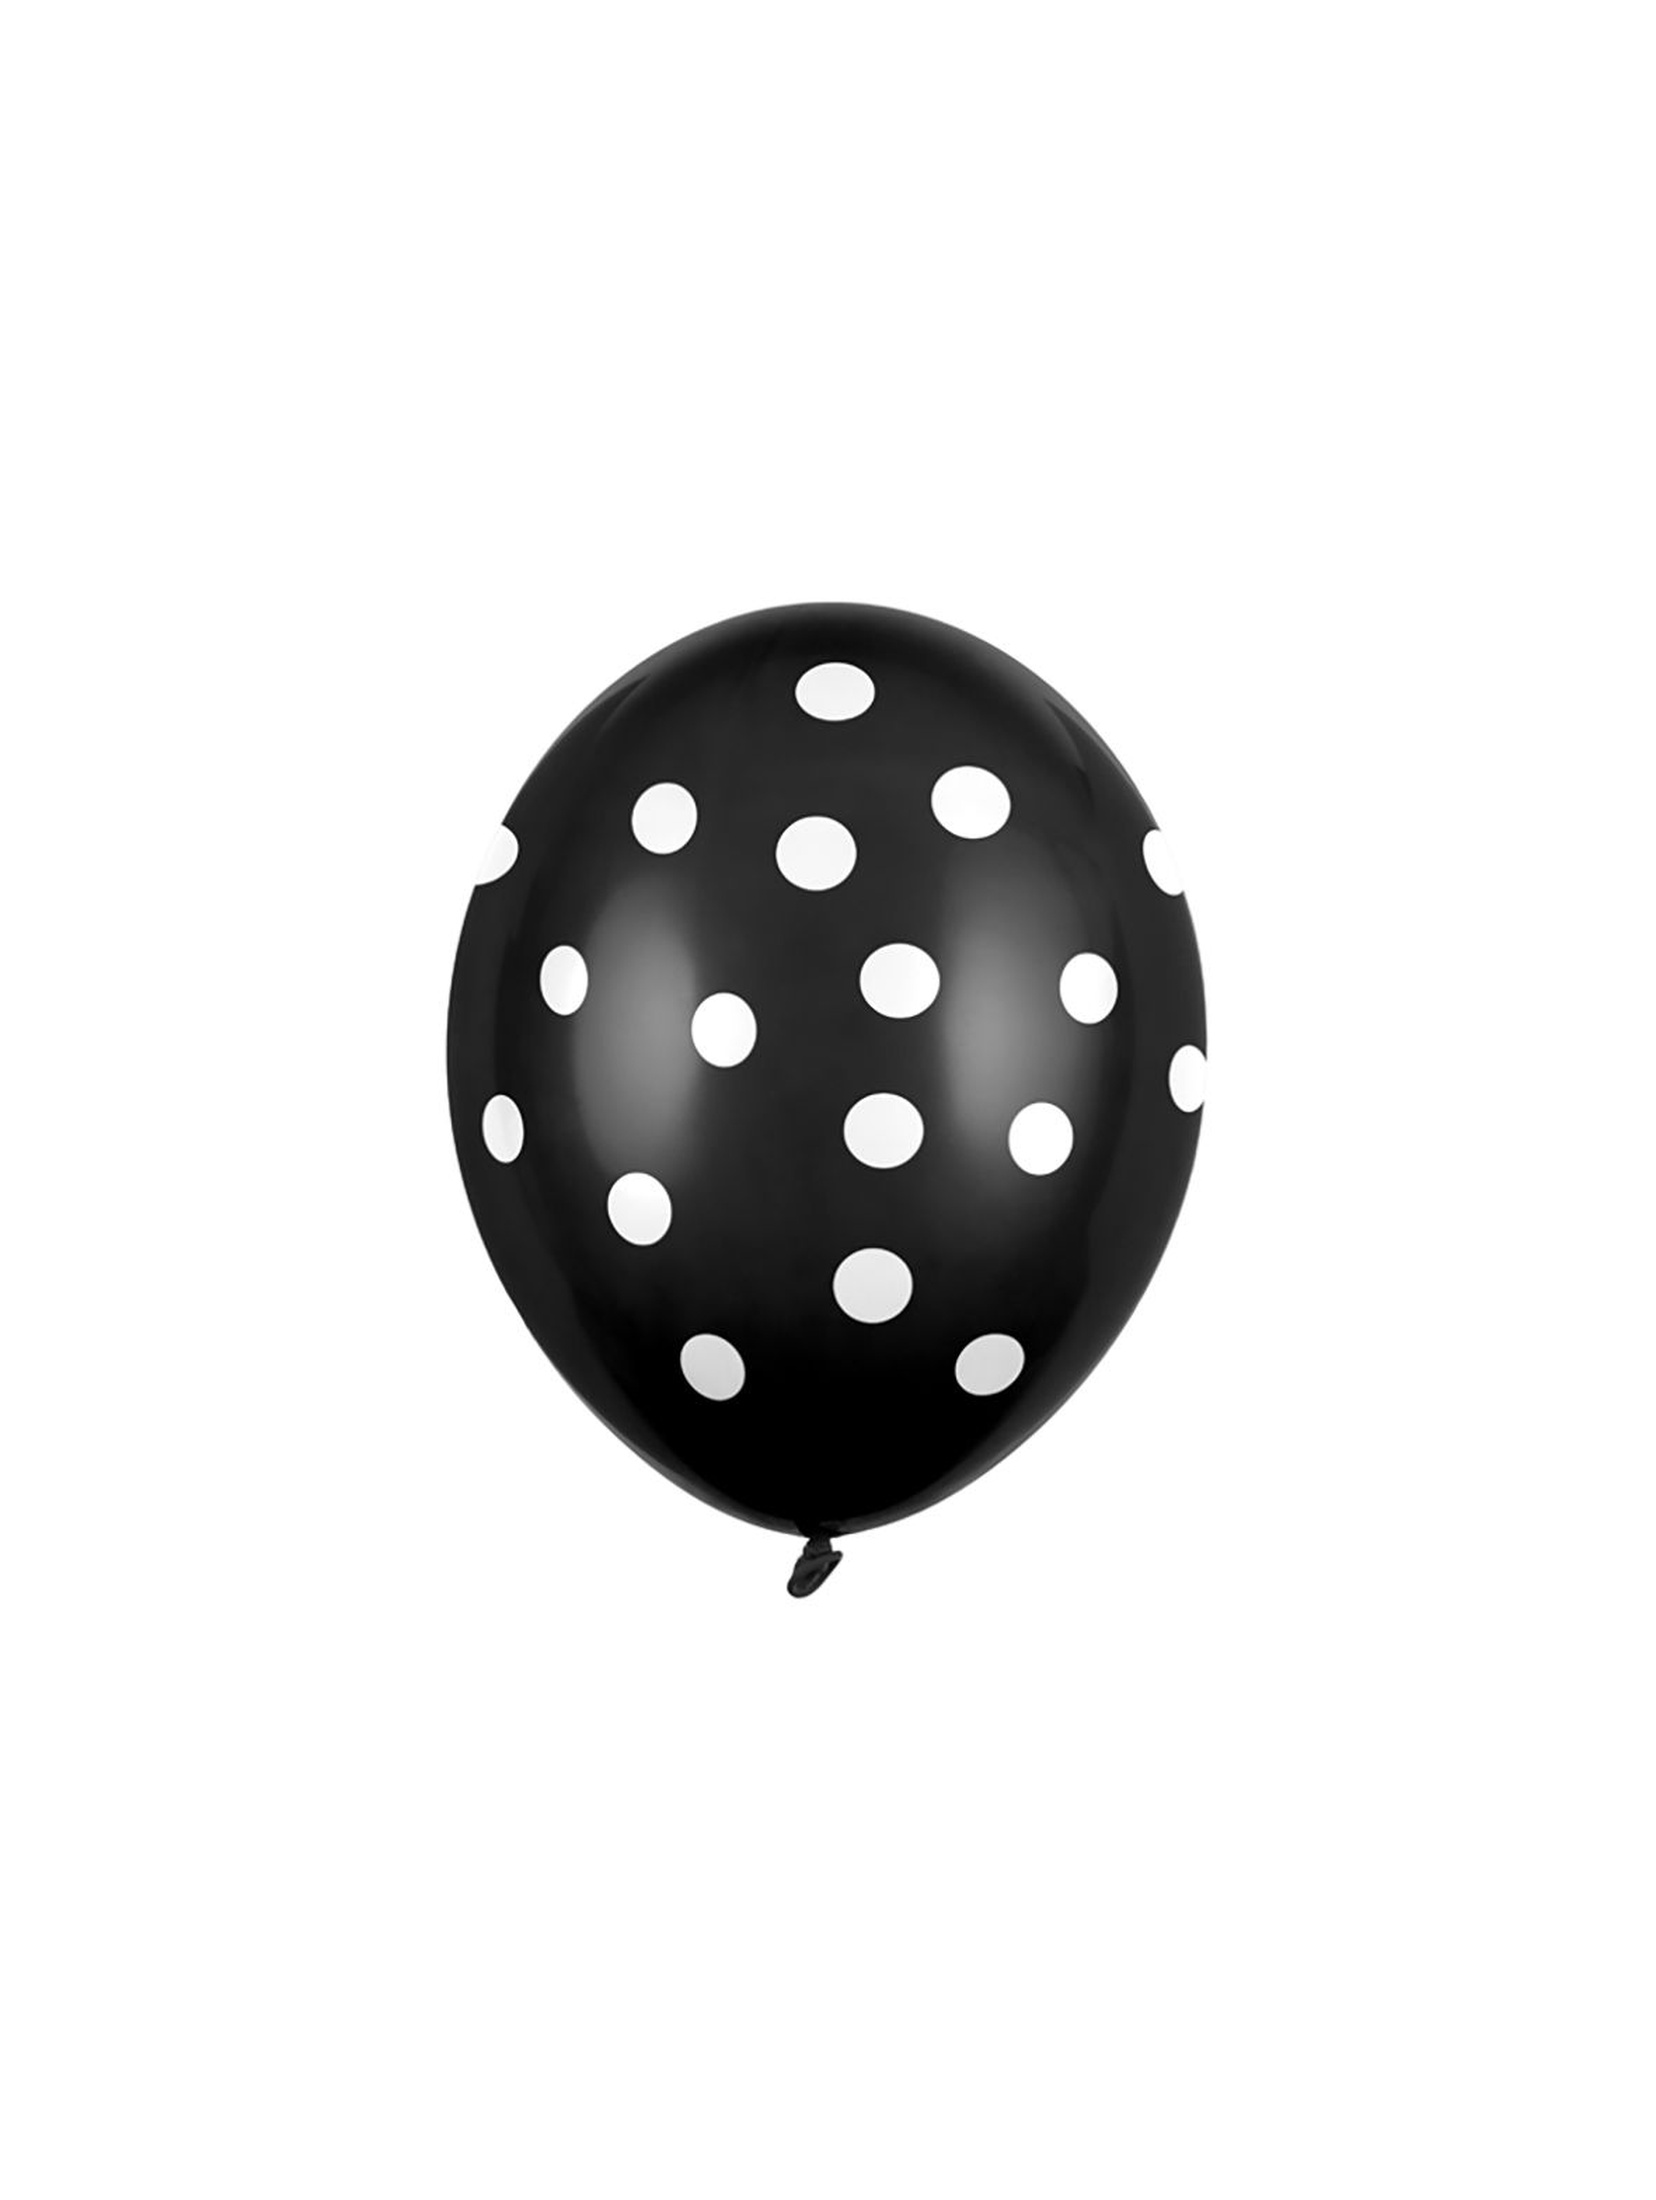 Balony 30 cm w białe kropki - Pastel Black 50 sztuk